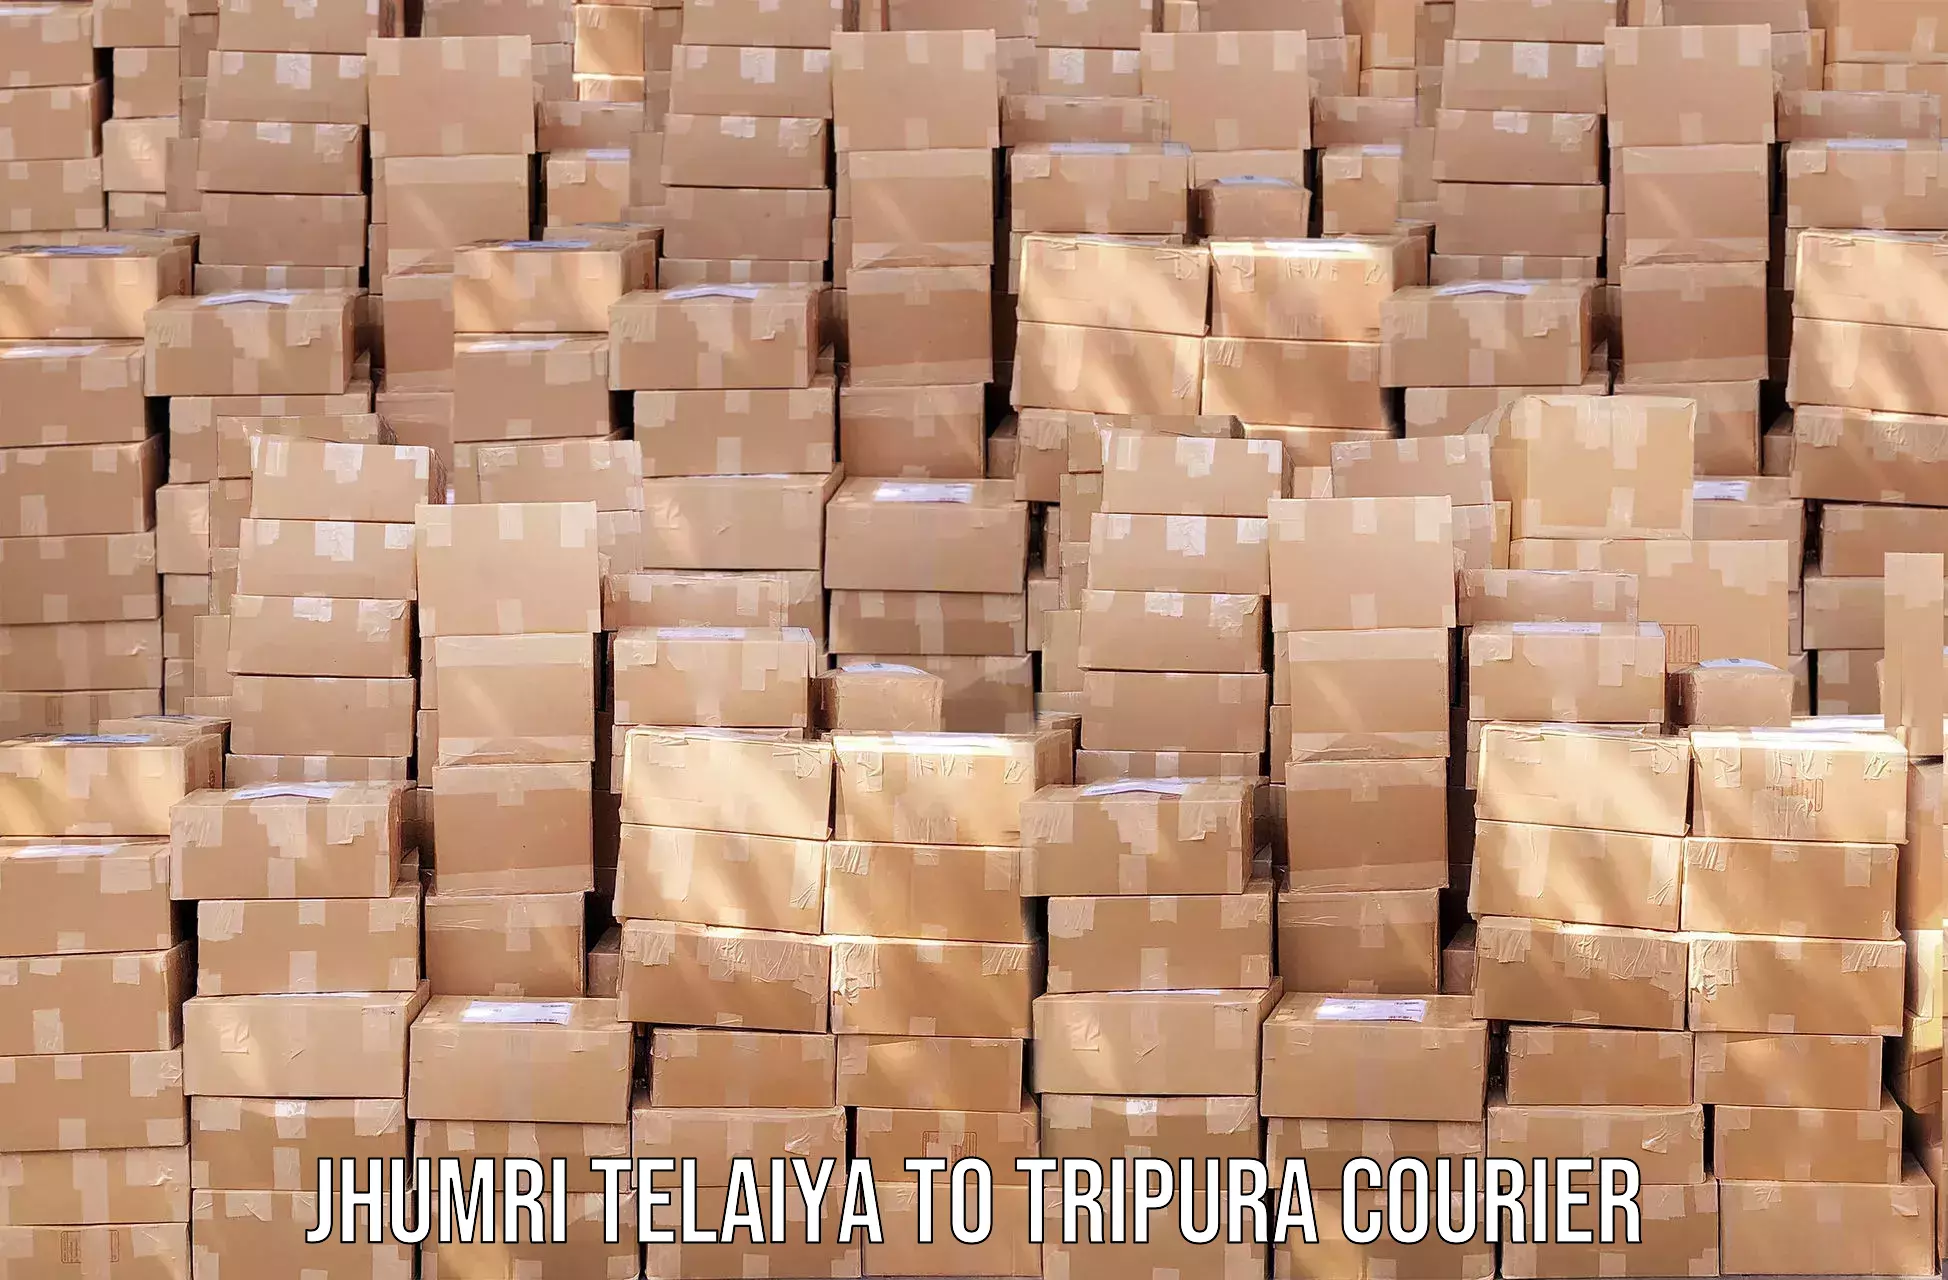 Corporate courier solutions Jhumri Telaiya to Aambasa